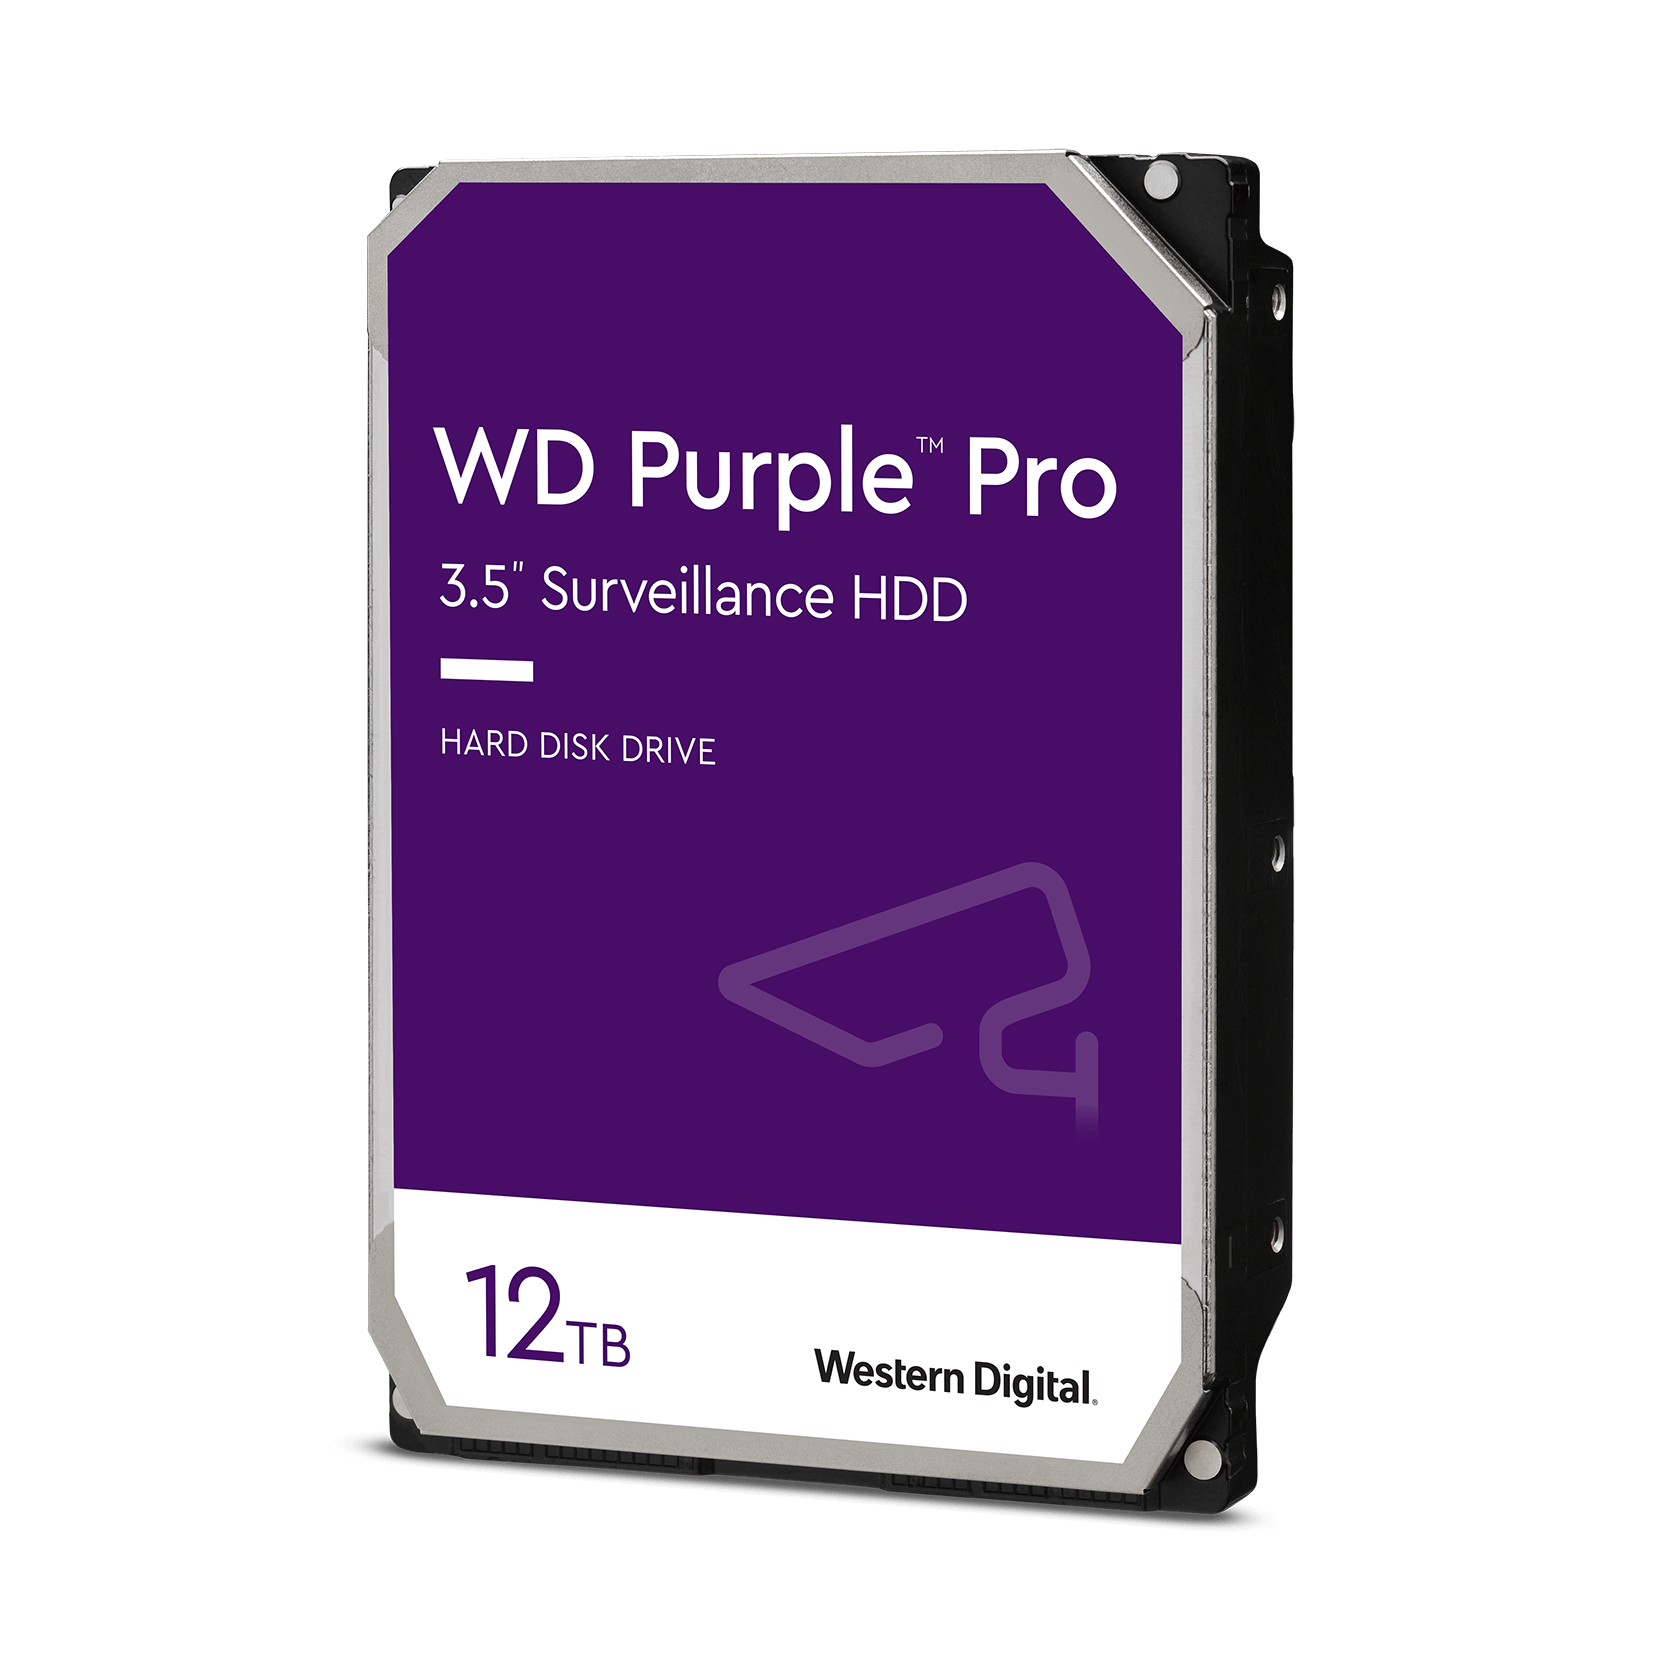 Western Digital 12TB WD Pro - Surveillance, Purple, Storage System - WD121PURP